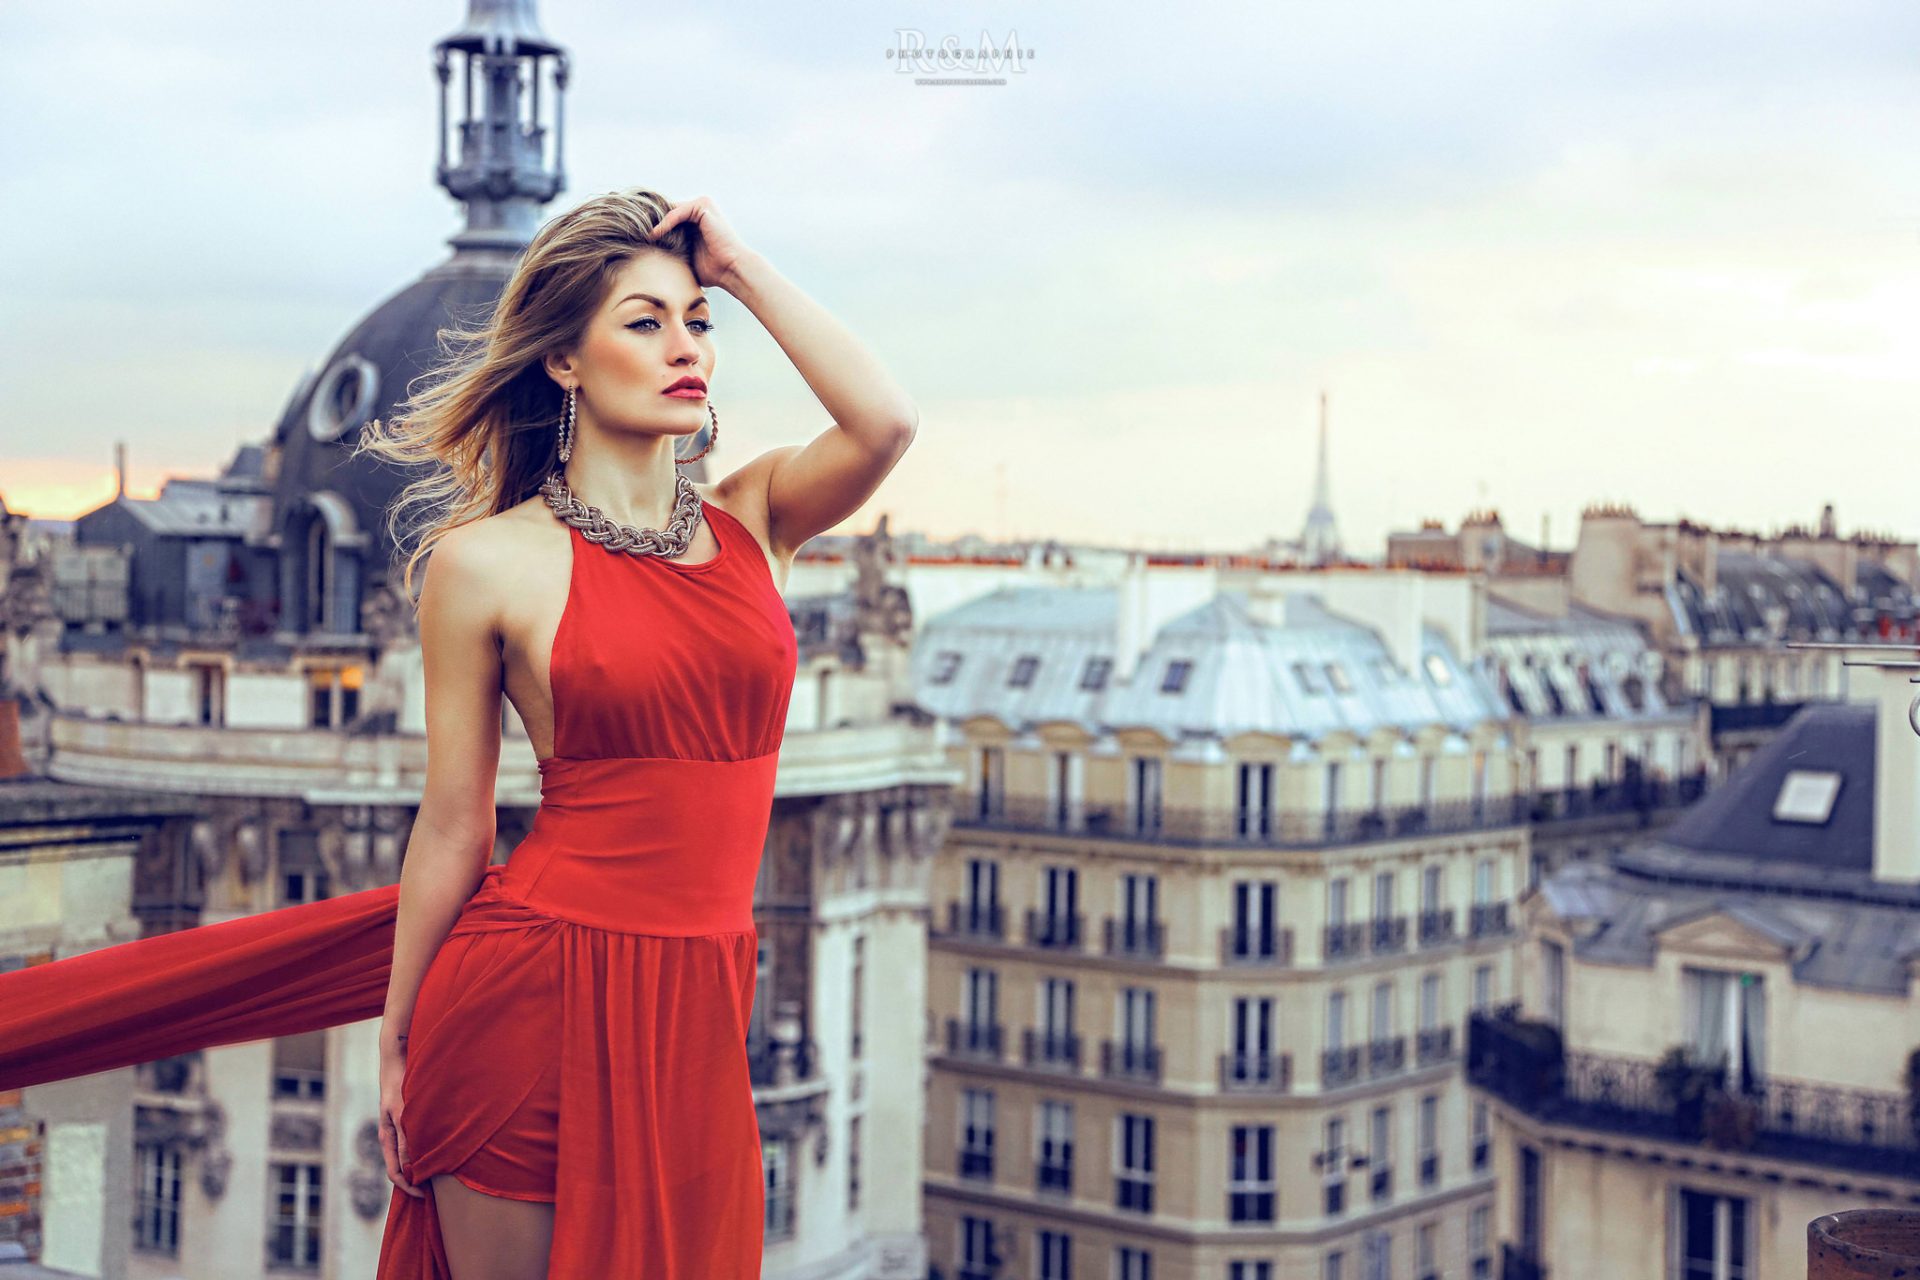 rmphotographie-fashion-photographer-photographe-mode-paris-book-photo-commercial-publicite-advertising-red-dress-rooftops